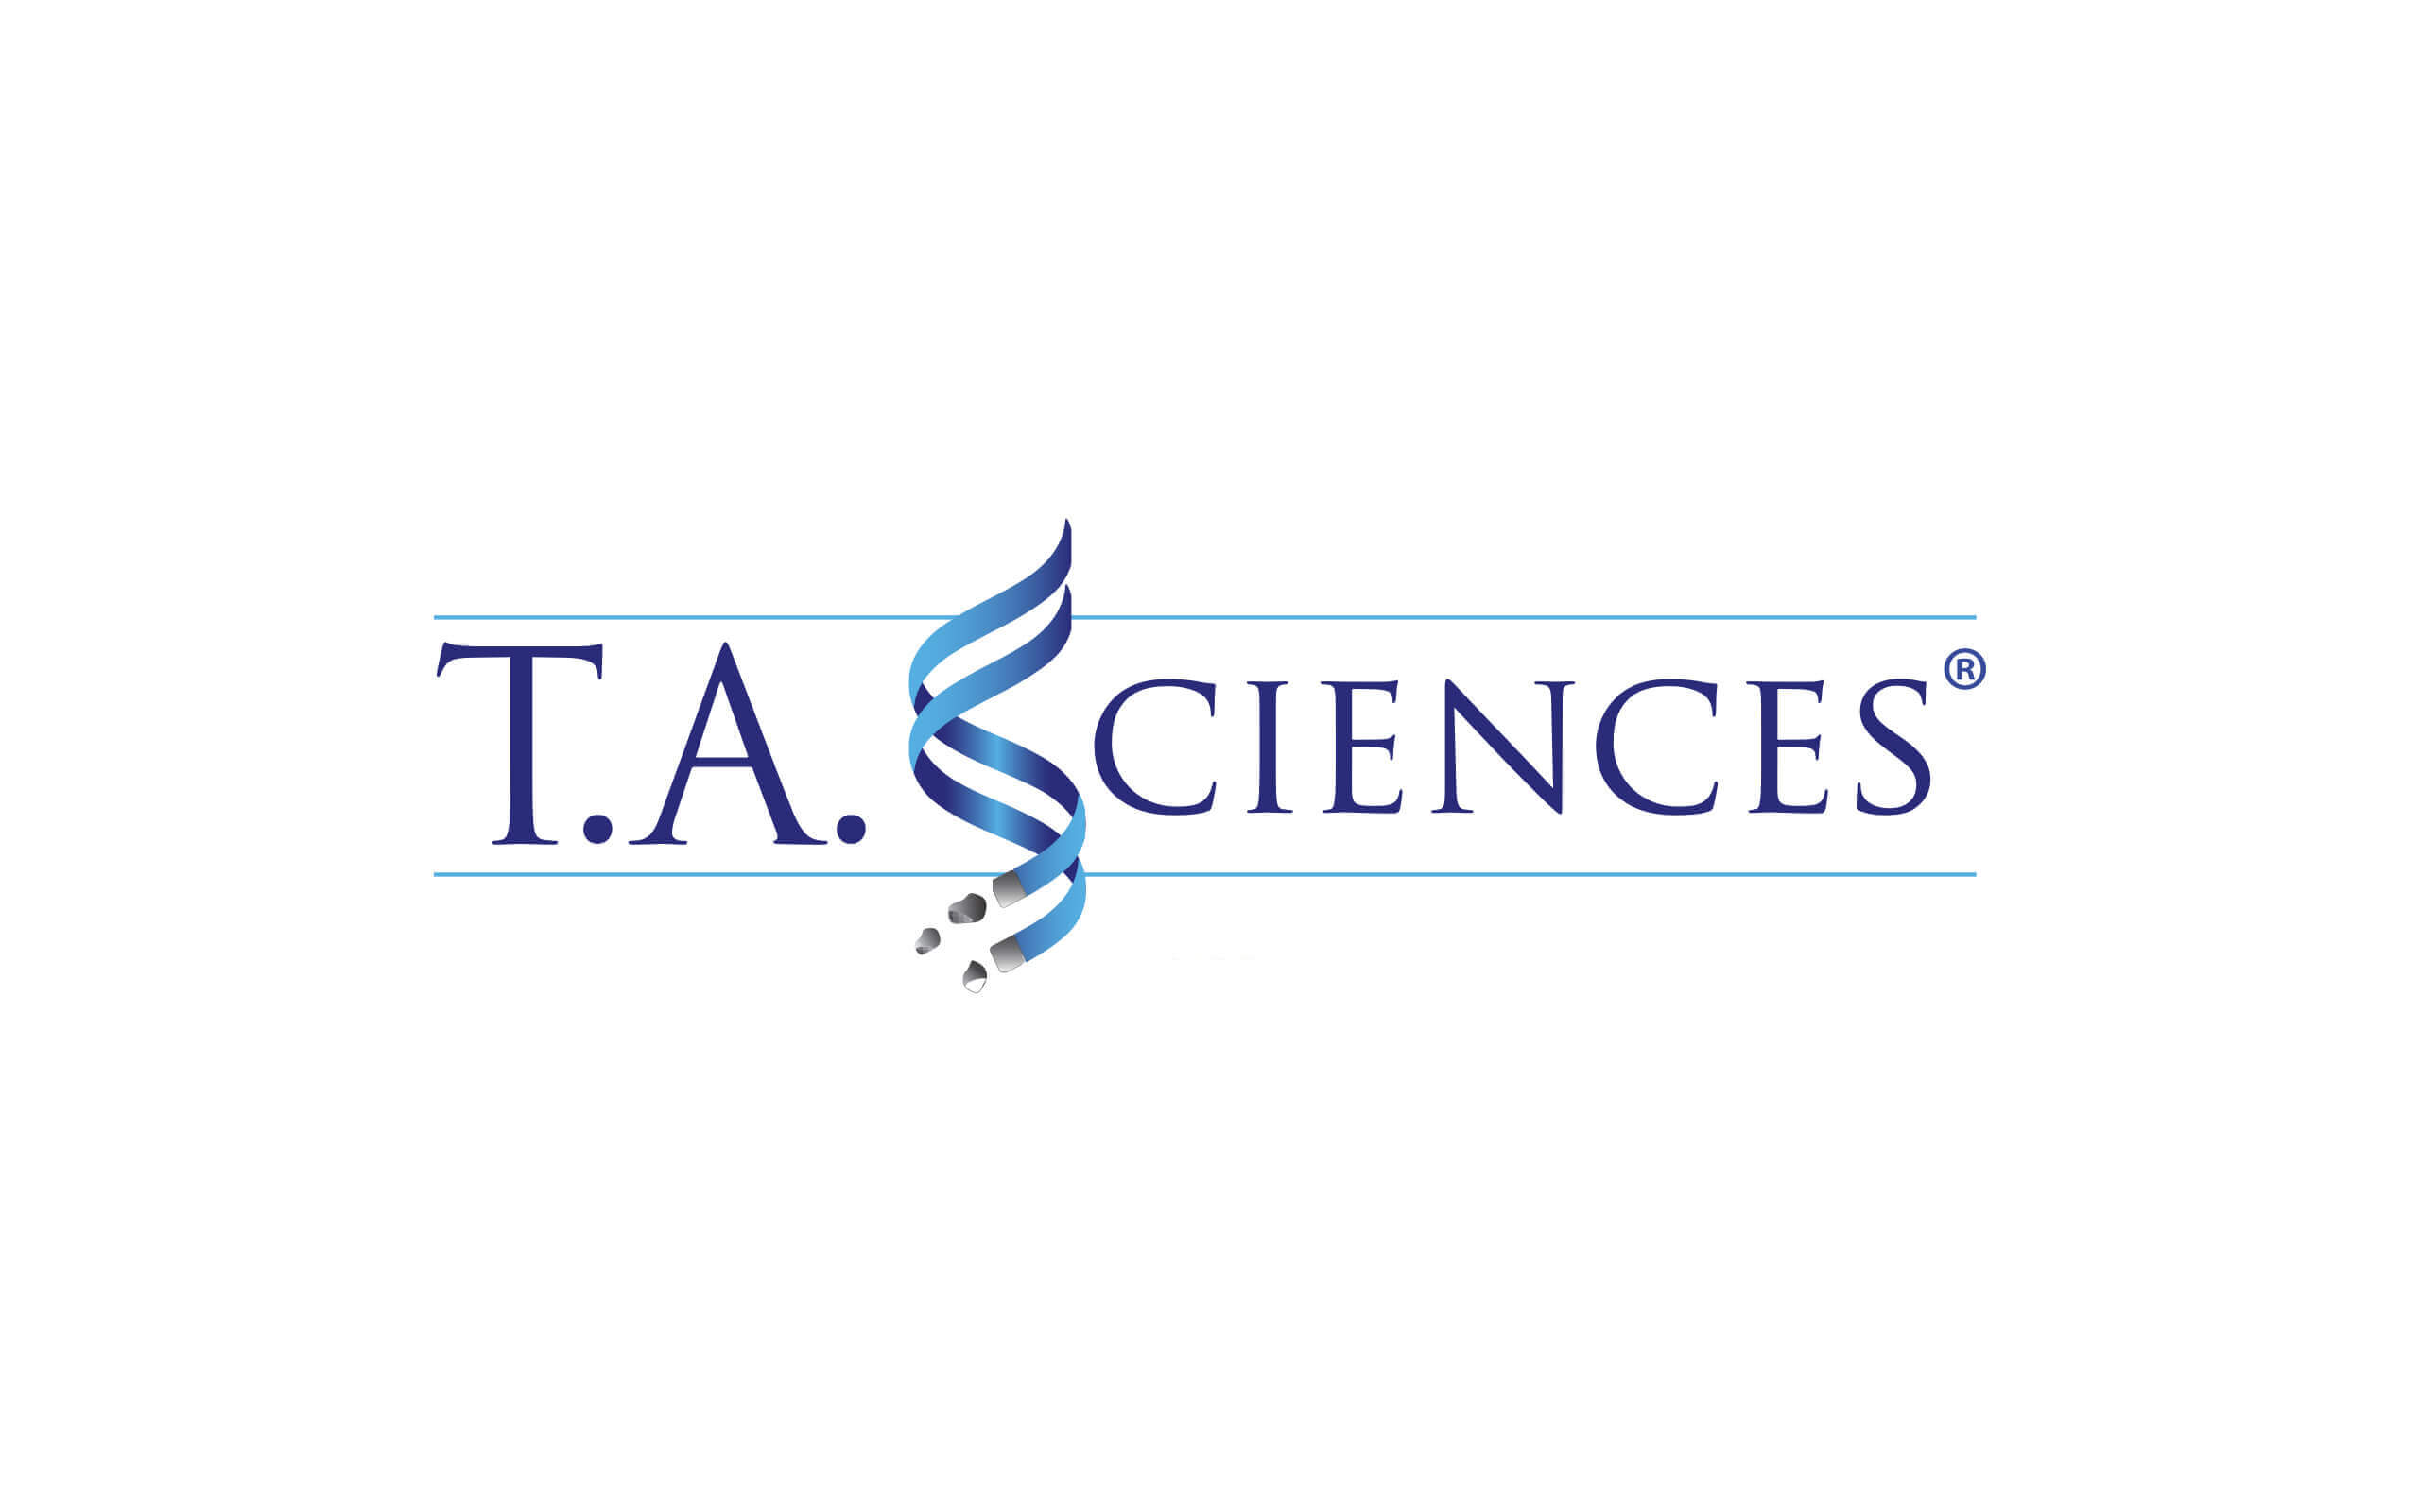 T.A. Sciences in Patton V. Egan